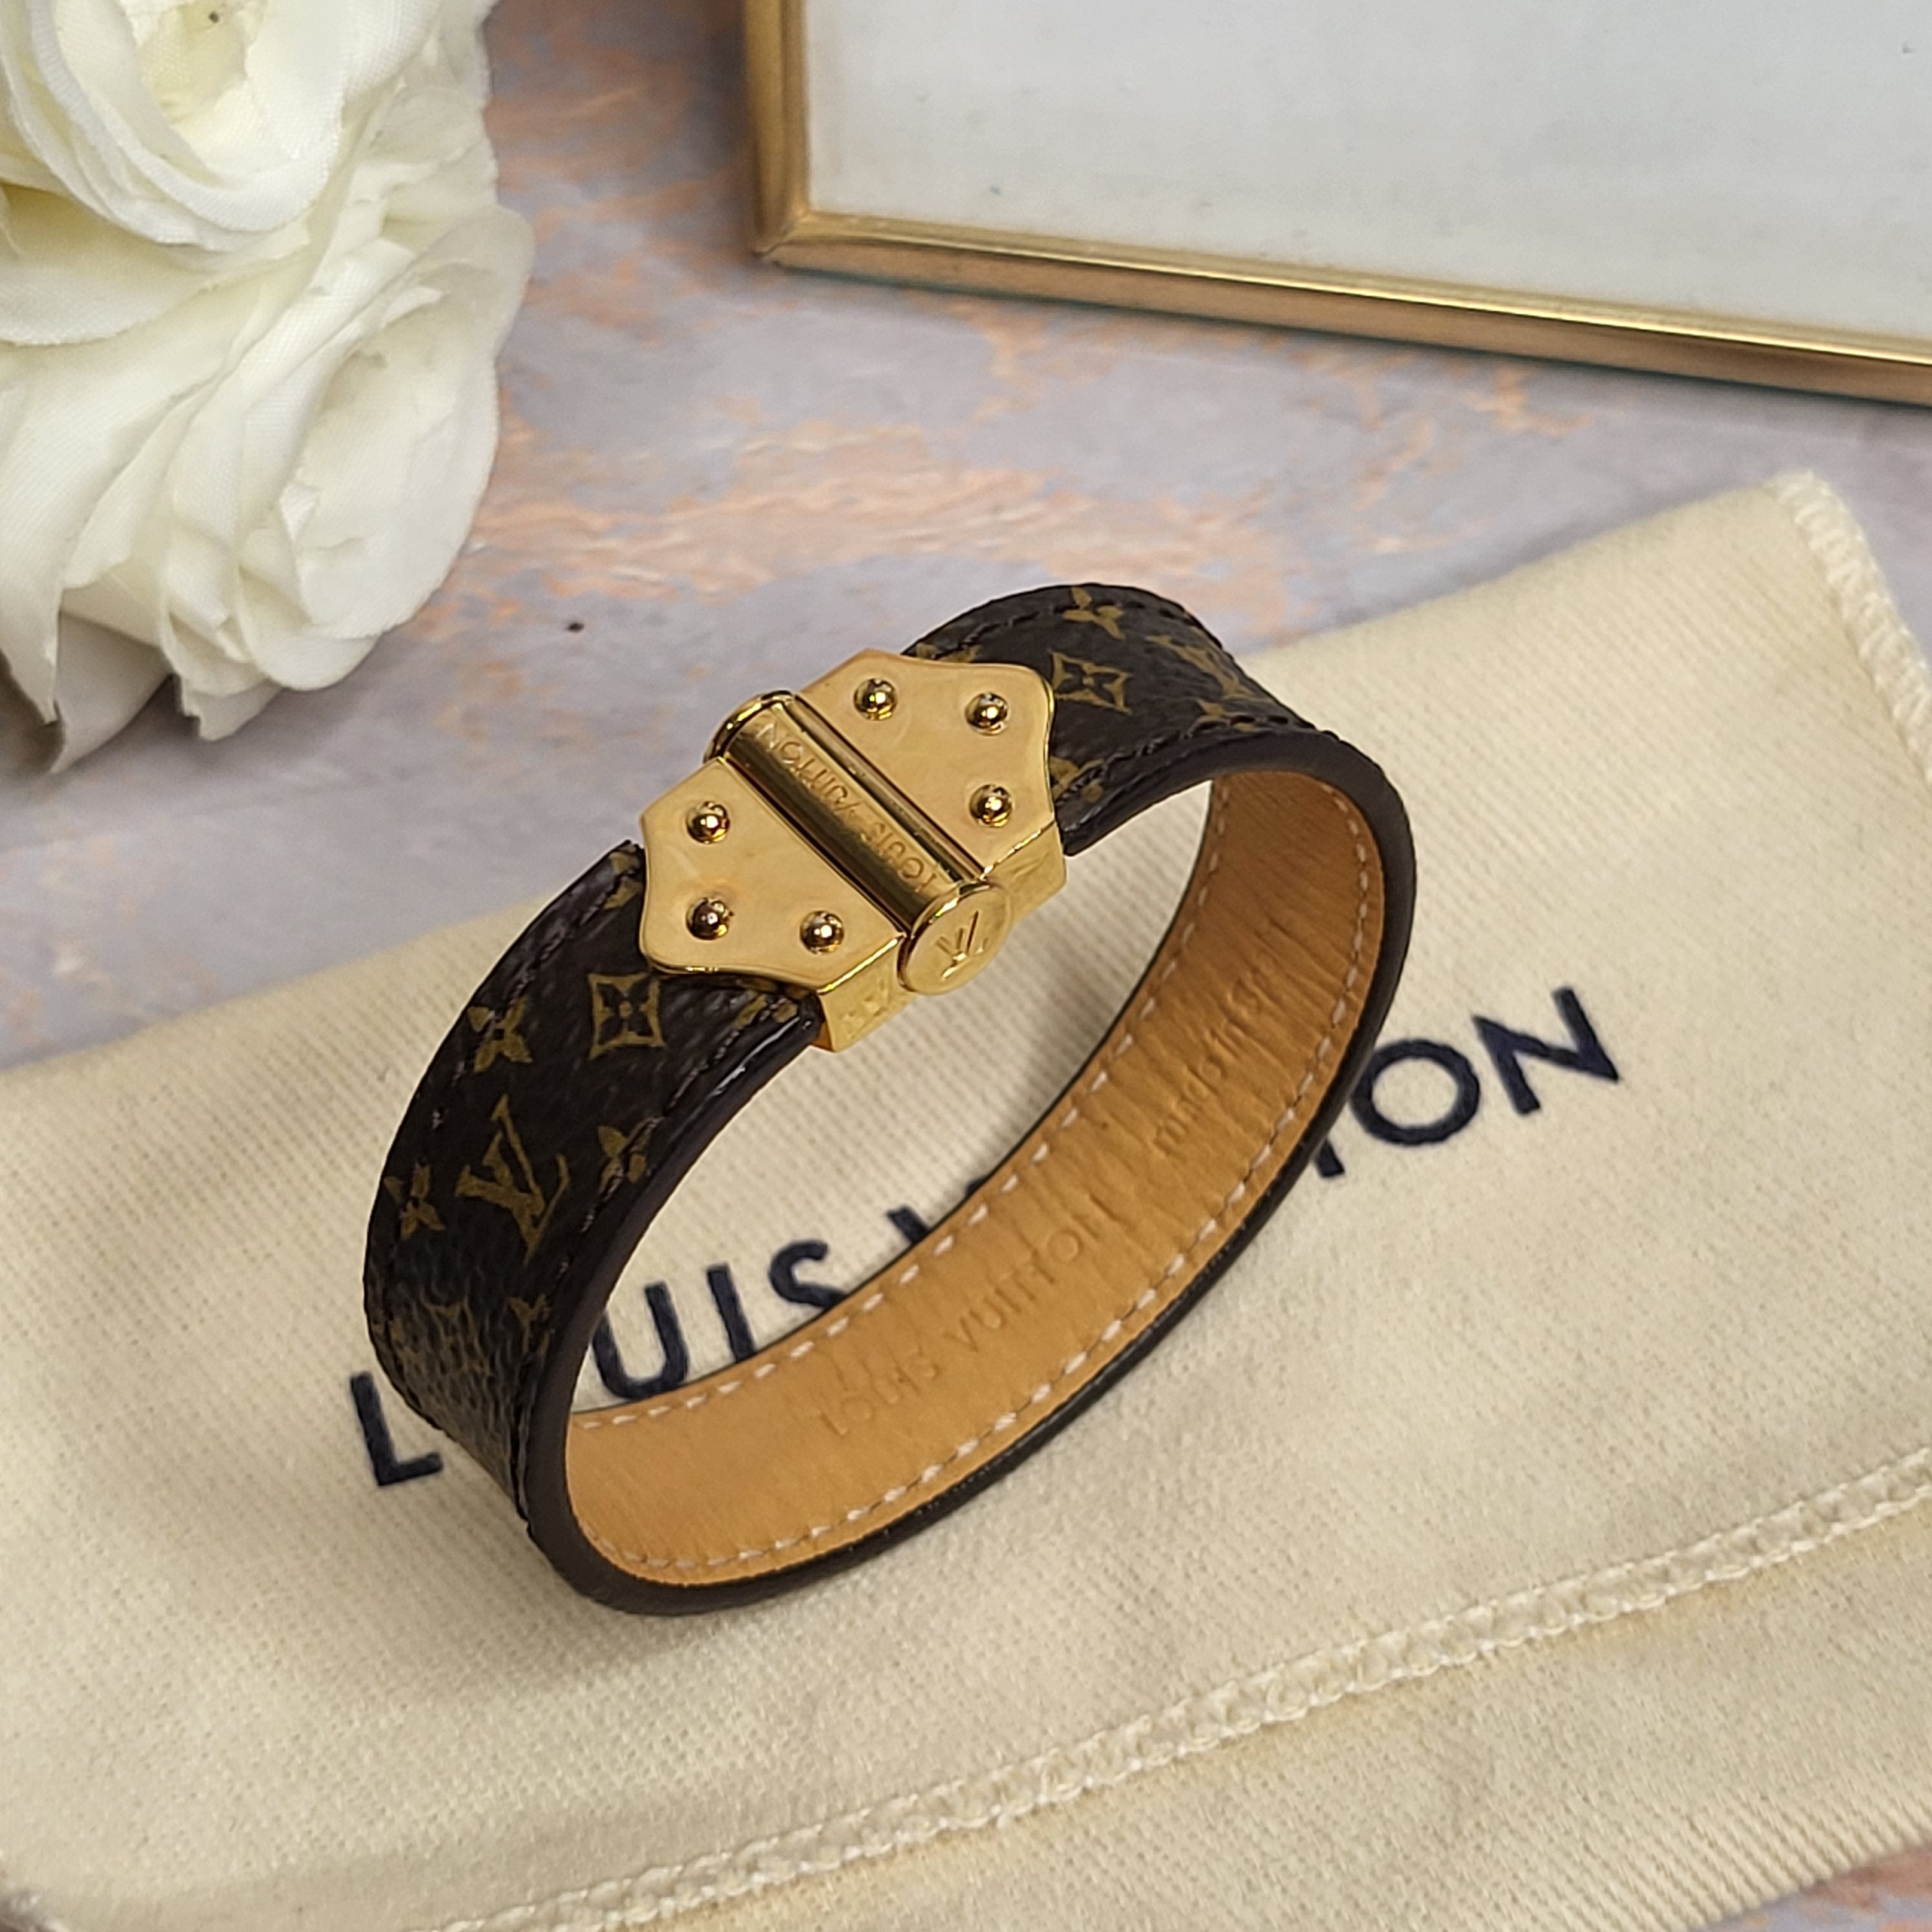 Louis Vuittom Nano Monogram Bracelet – Marichelle's Empire